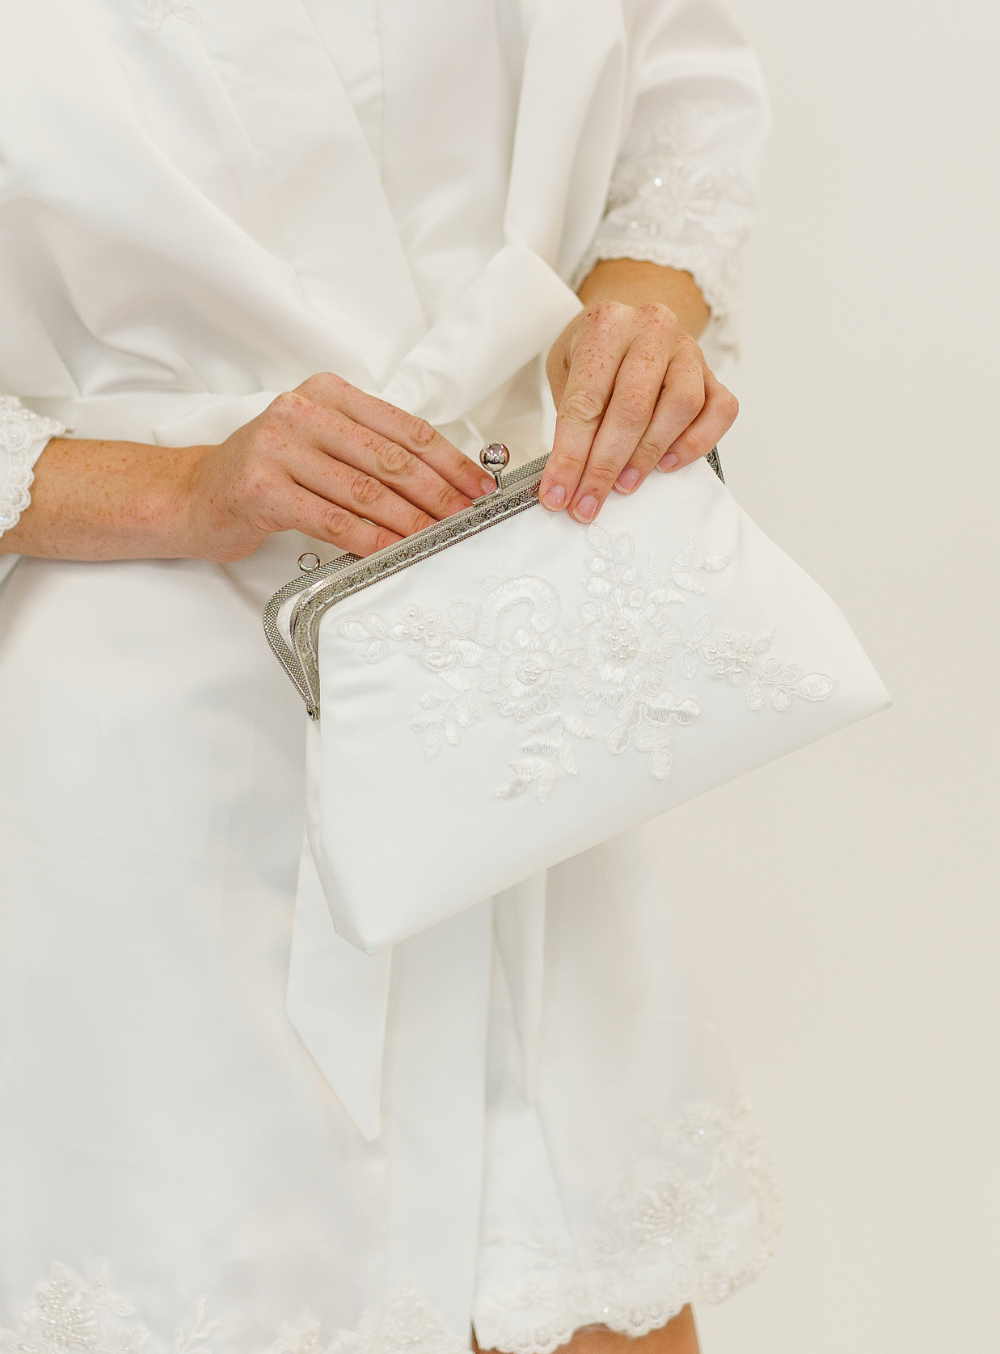 Bridal purse stock image. Image of bride, bridal, accessory - 27051235